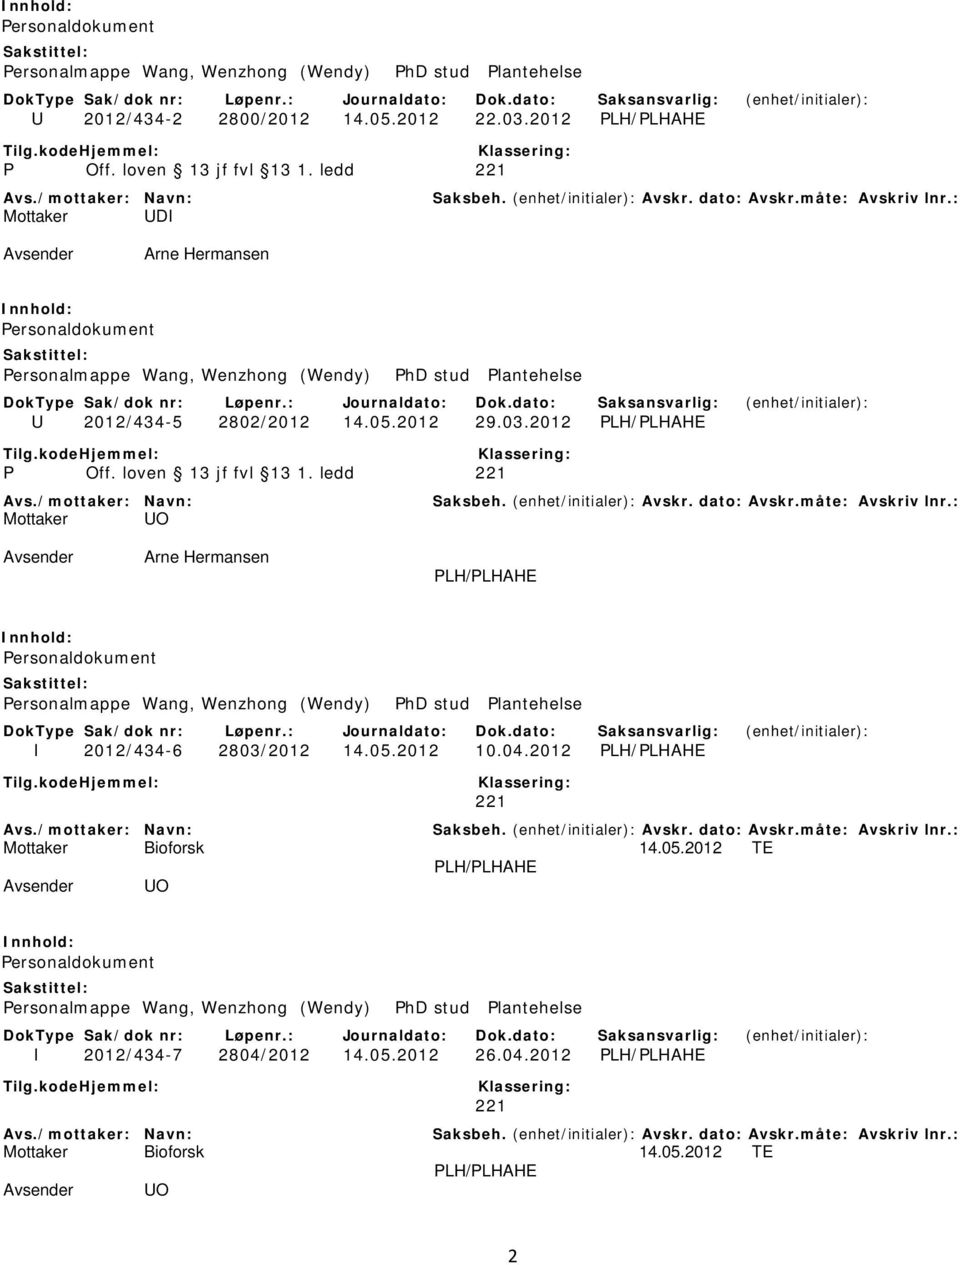 loven 13 jf fvl 13 1. ledd 221 UO Arne Hermansen PLH/PLHAHE Personaldokument Personalmappe Wang, Wenzhong (Wendy) PhD stud Plantehelse I 2012/434-6 2803/2012 14.05.2012 10.04.